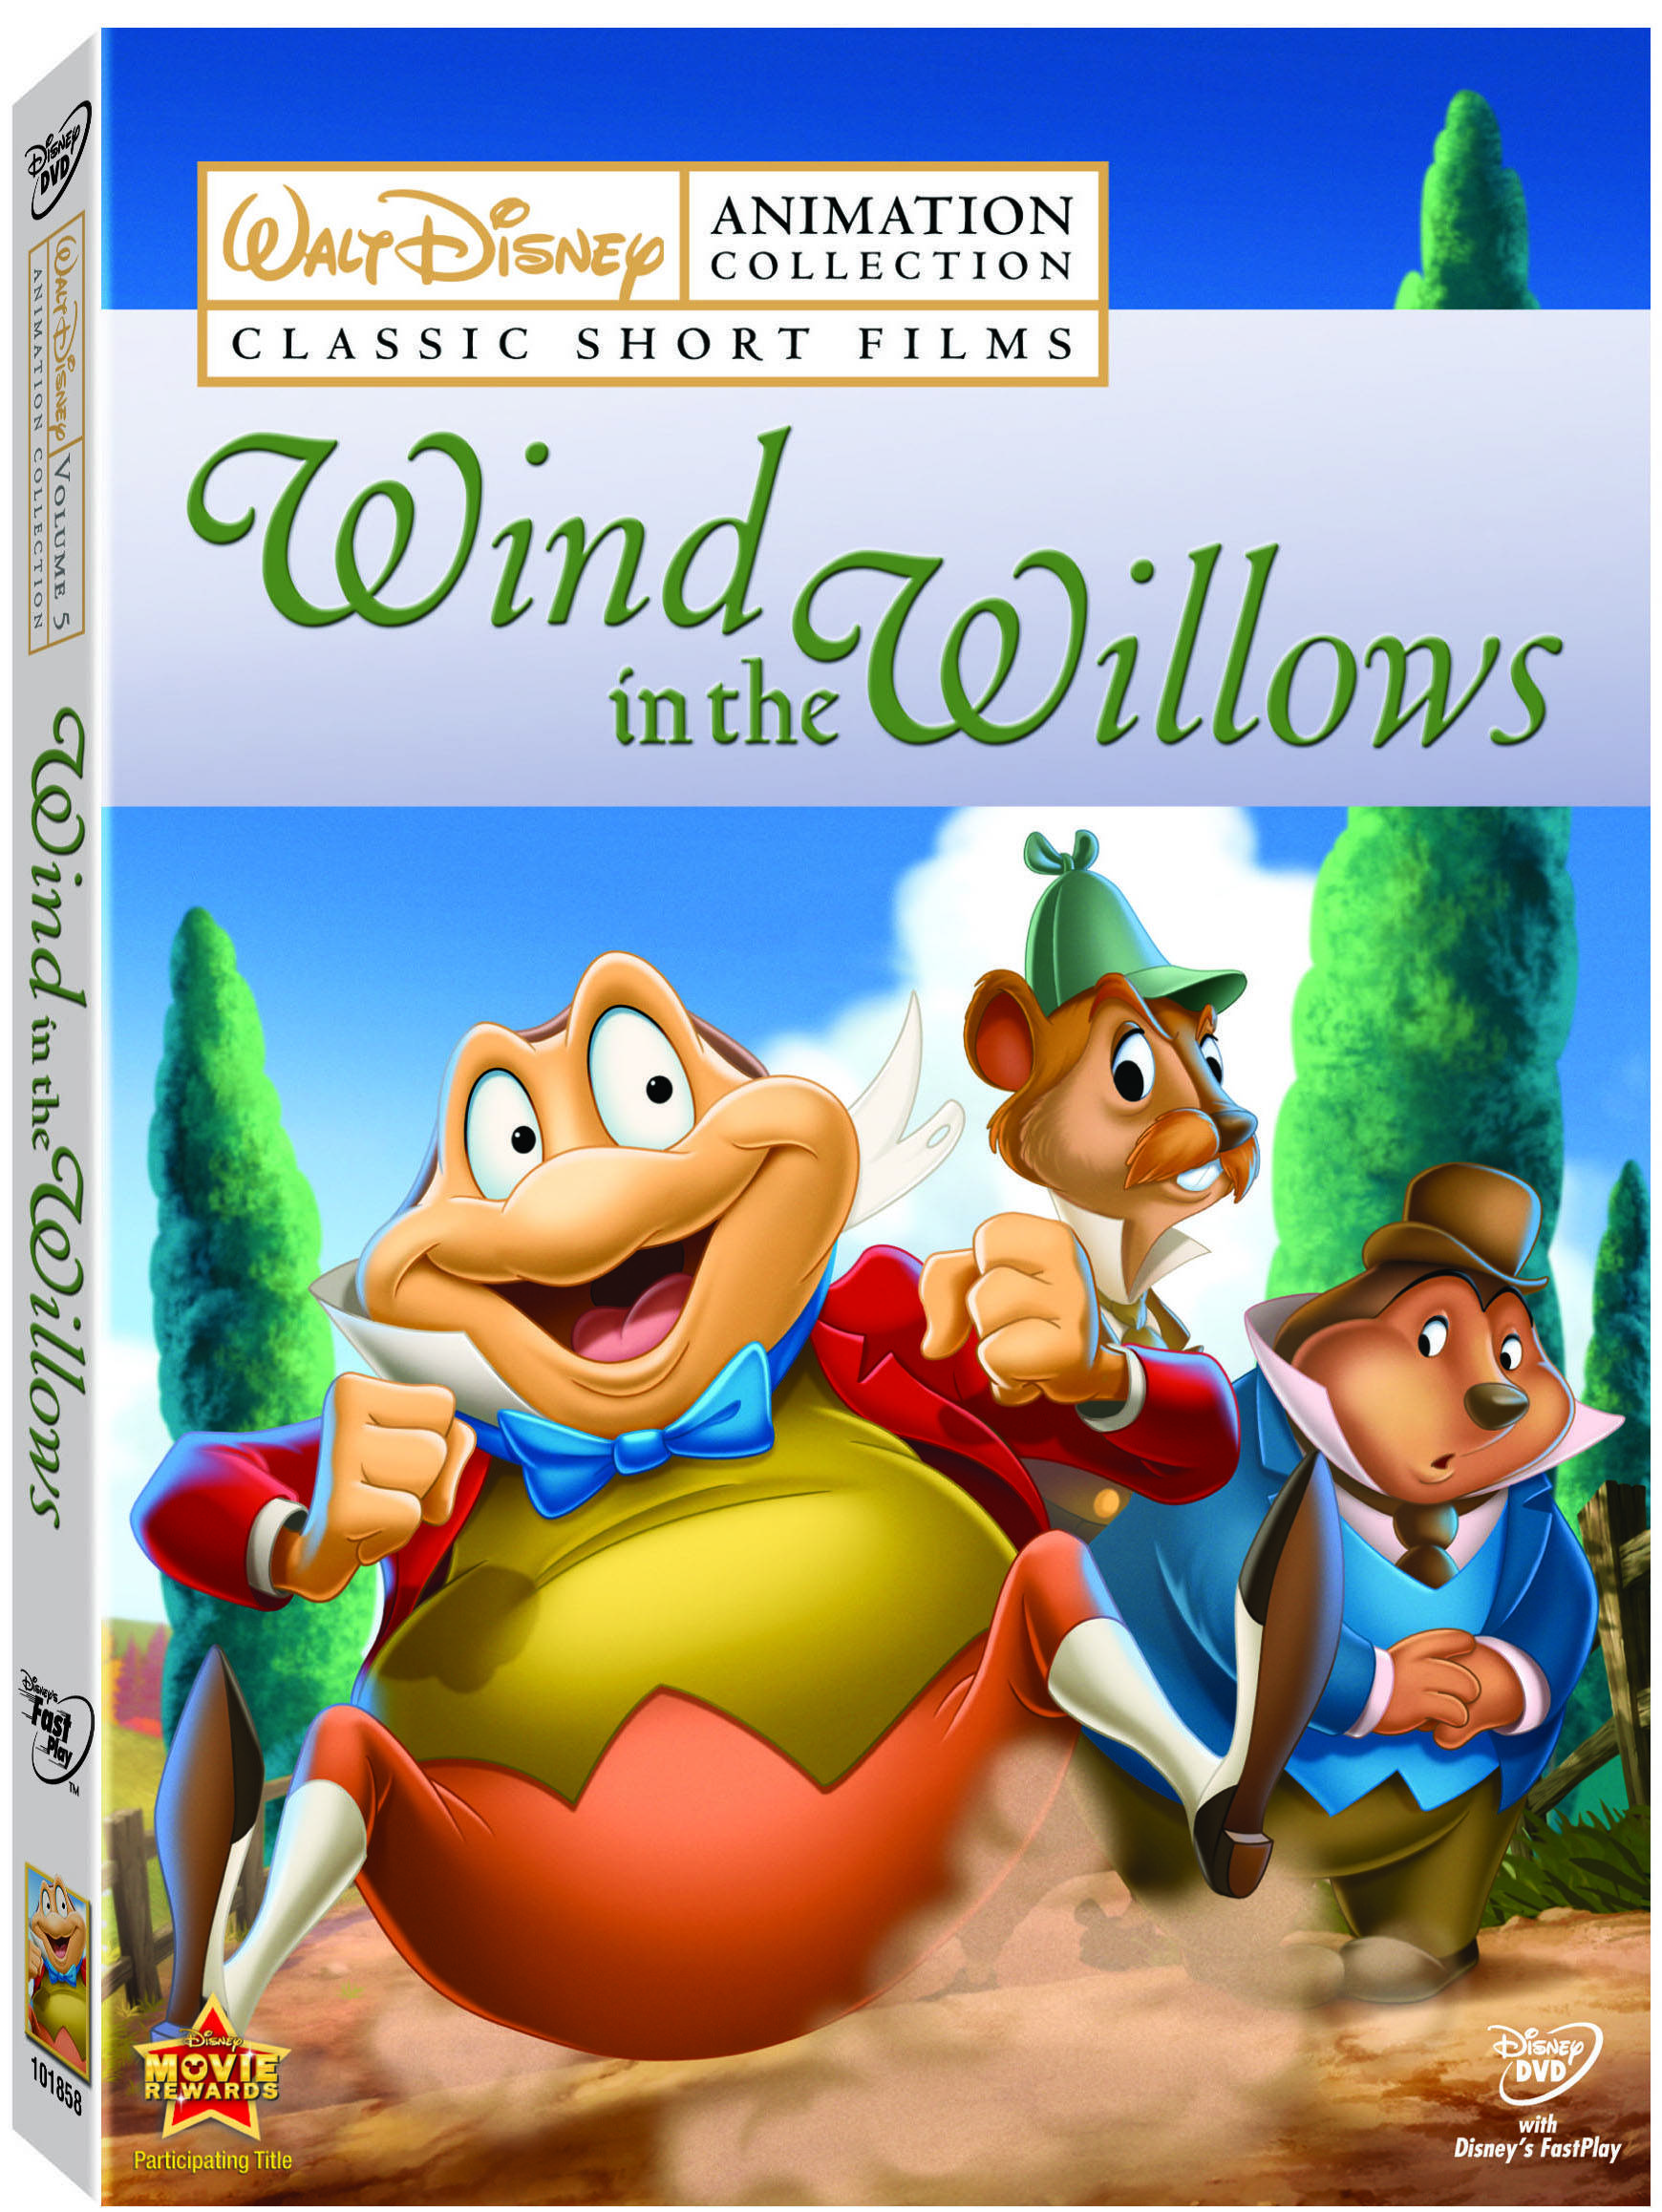 Walt Disney Animation Collection Classic Short Films Disney Wiki 0559